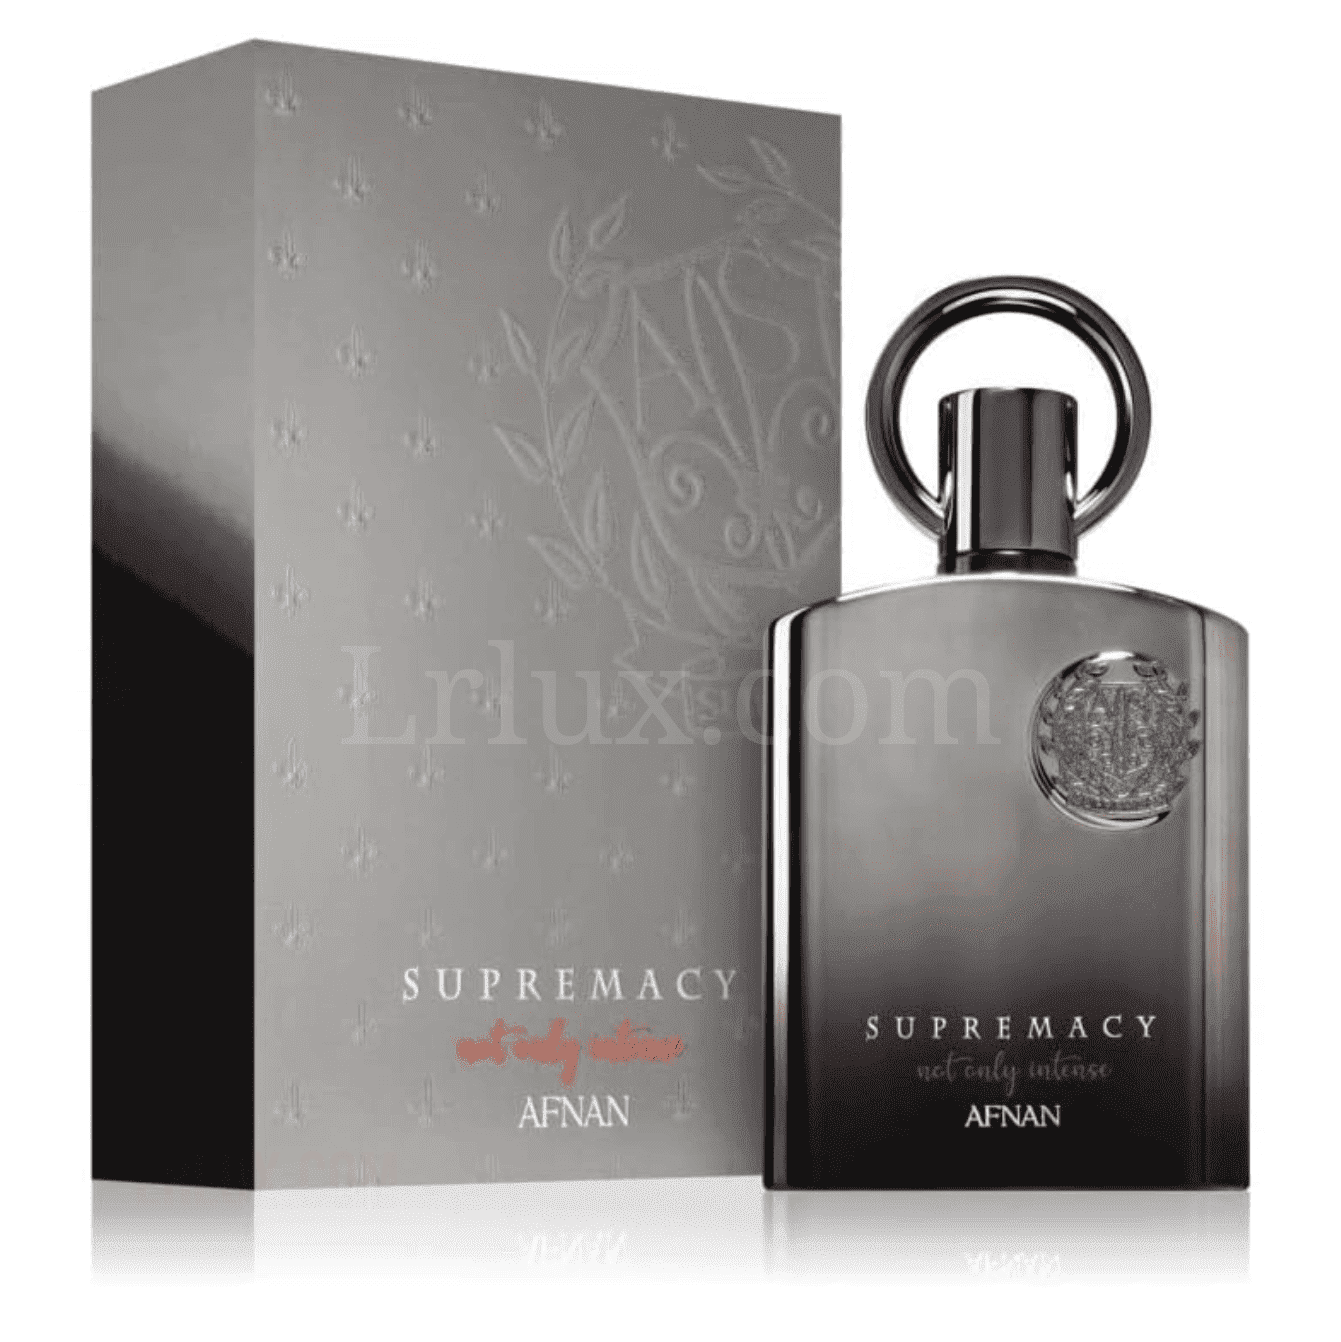 Afnan Supremacy Not Only Intense By Afnan Perfumes Eau De Parfum Spray 3.4 Oz - Lrlux.com